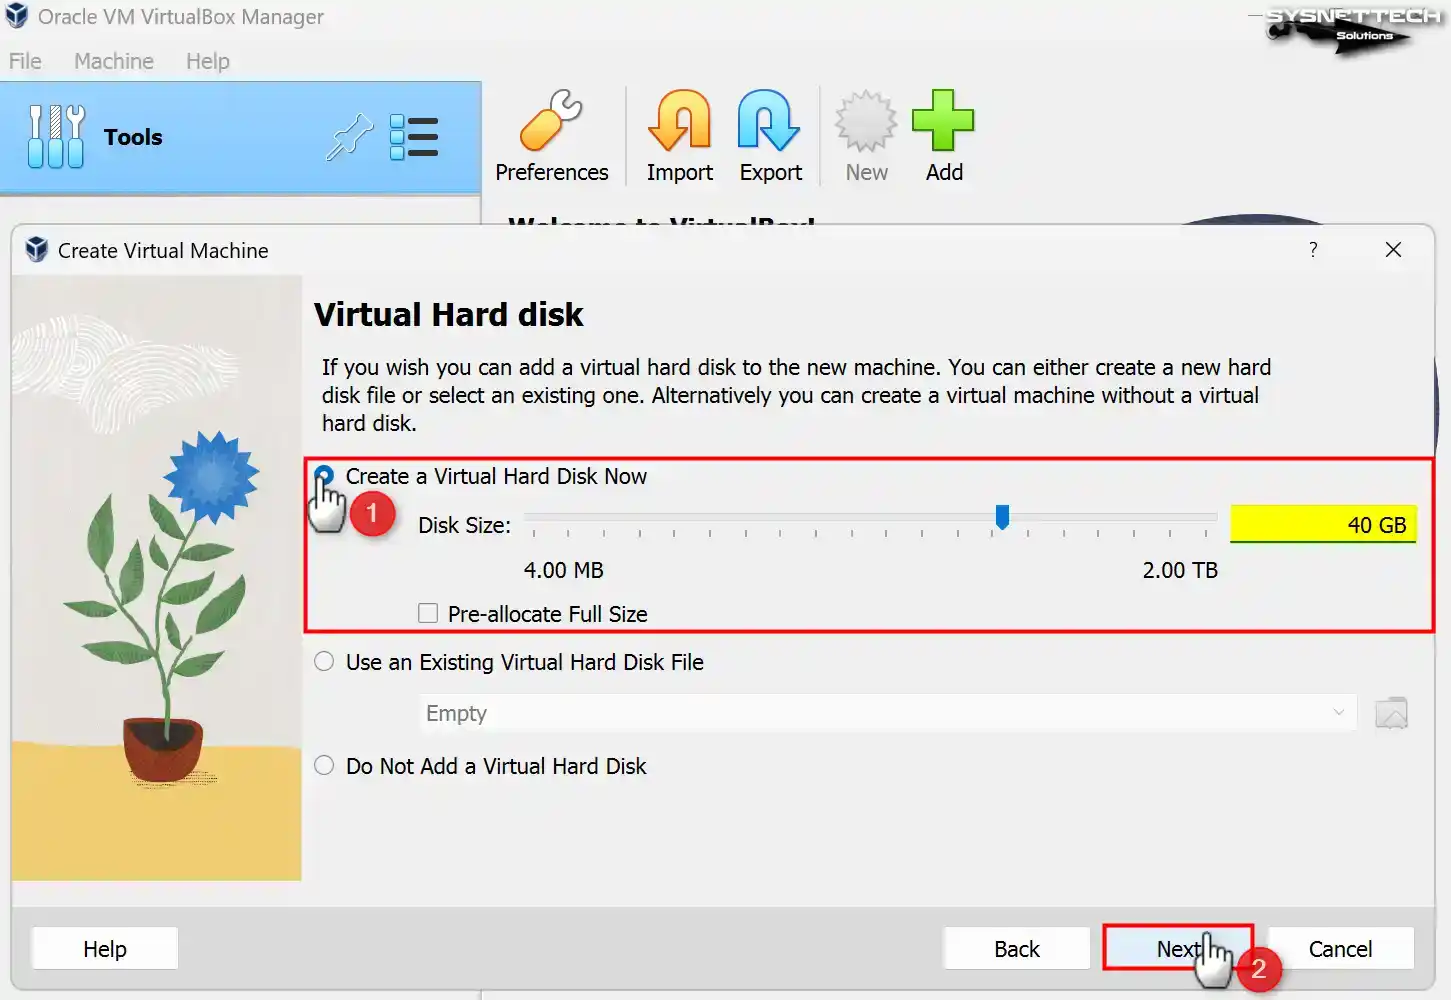 Creating a New 40GB Virtual Hard Disk